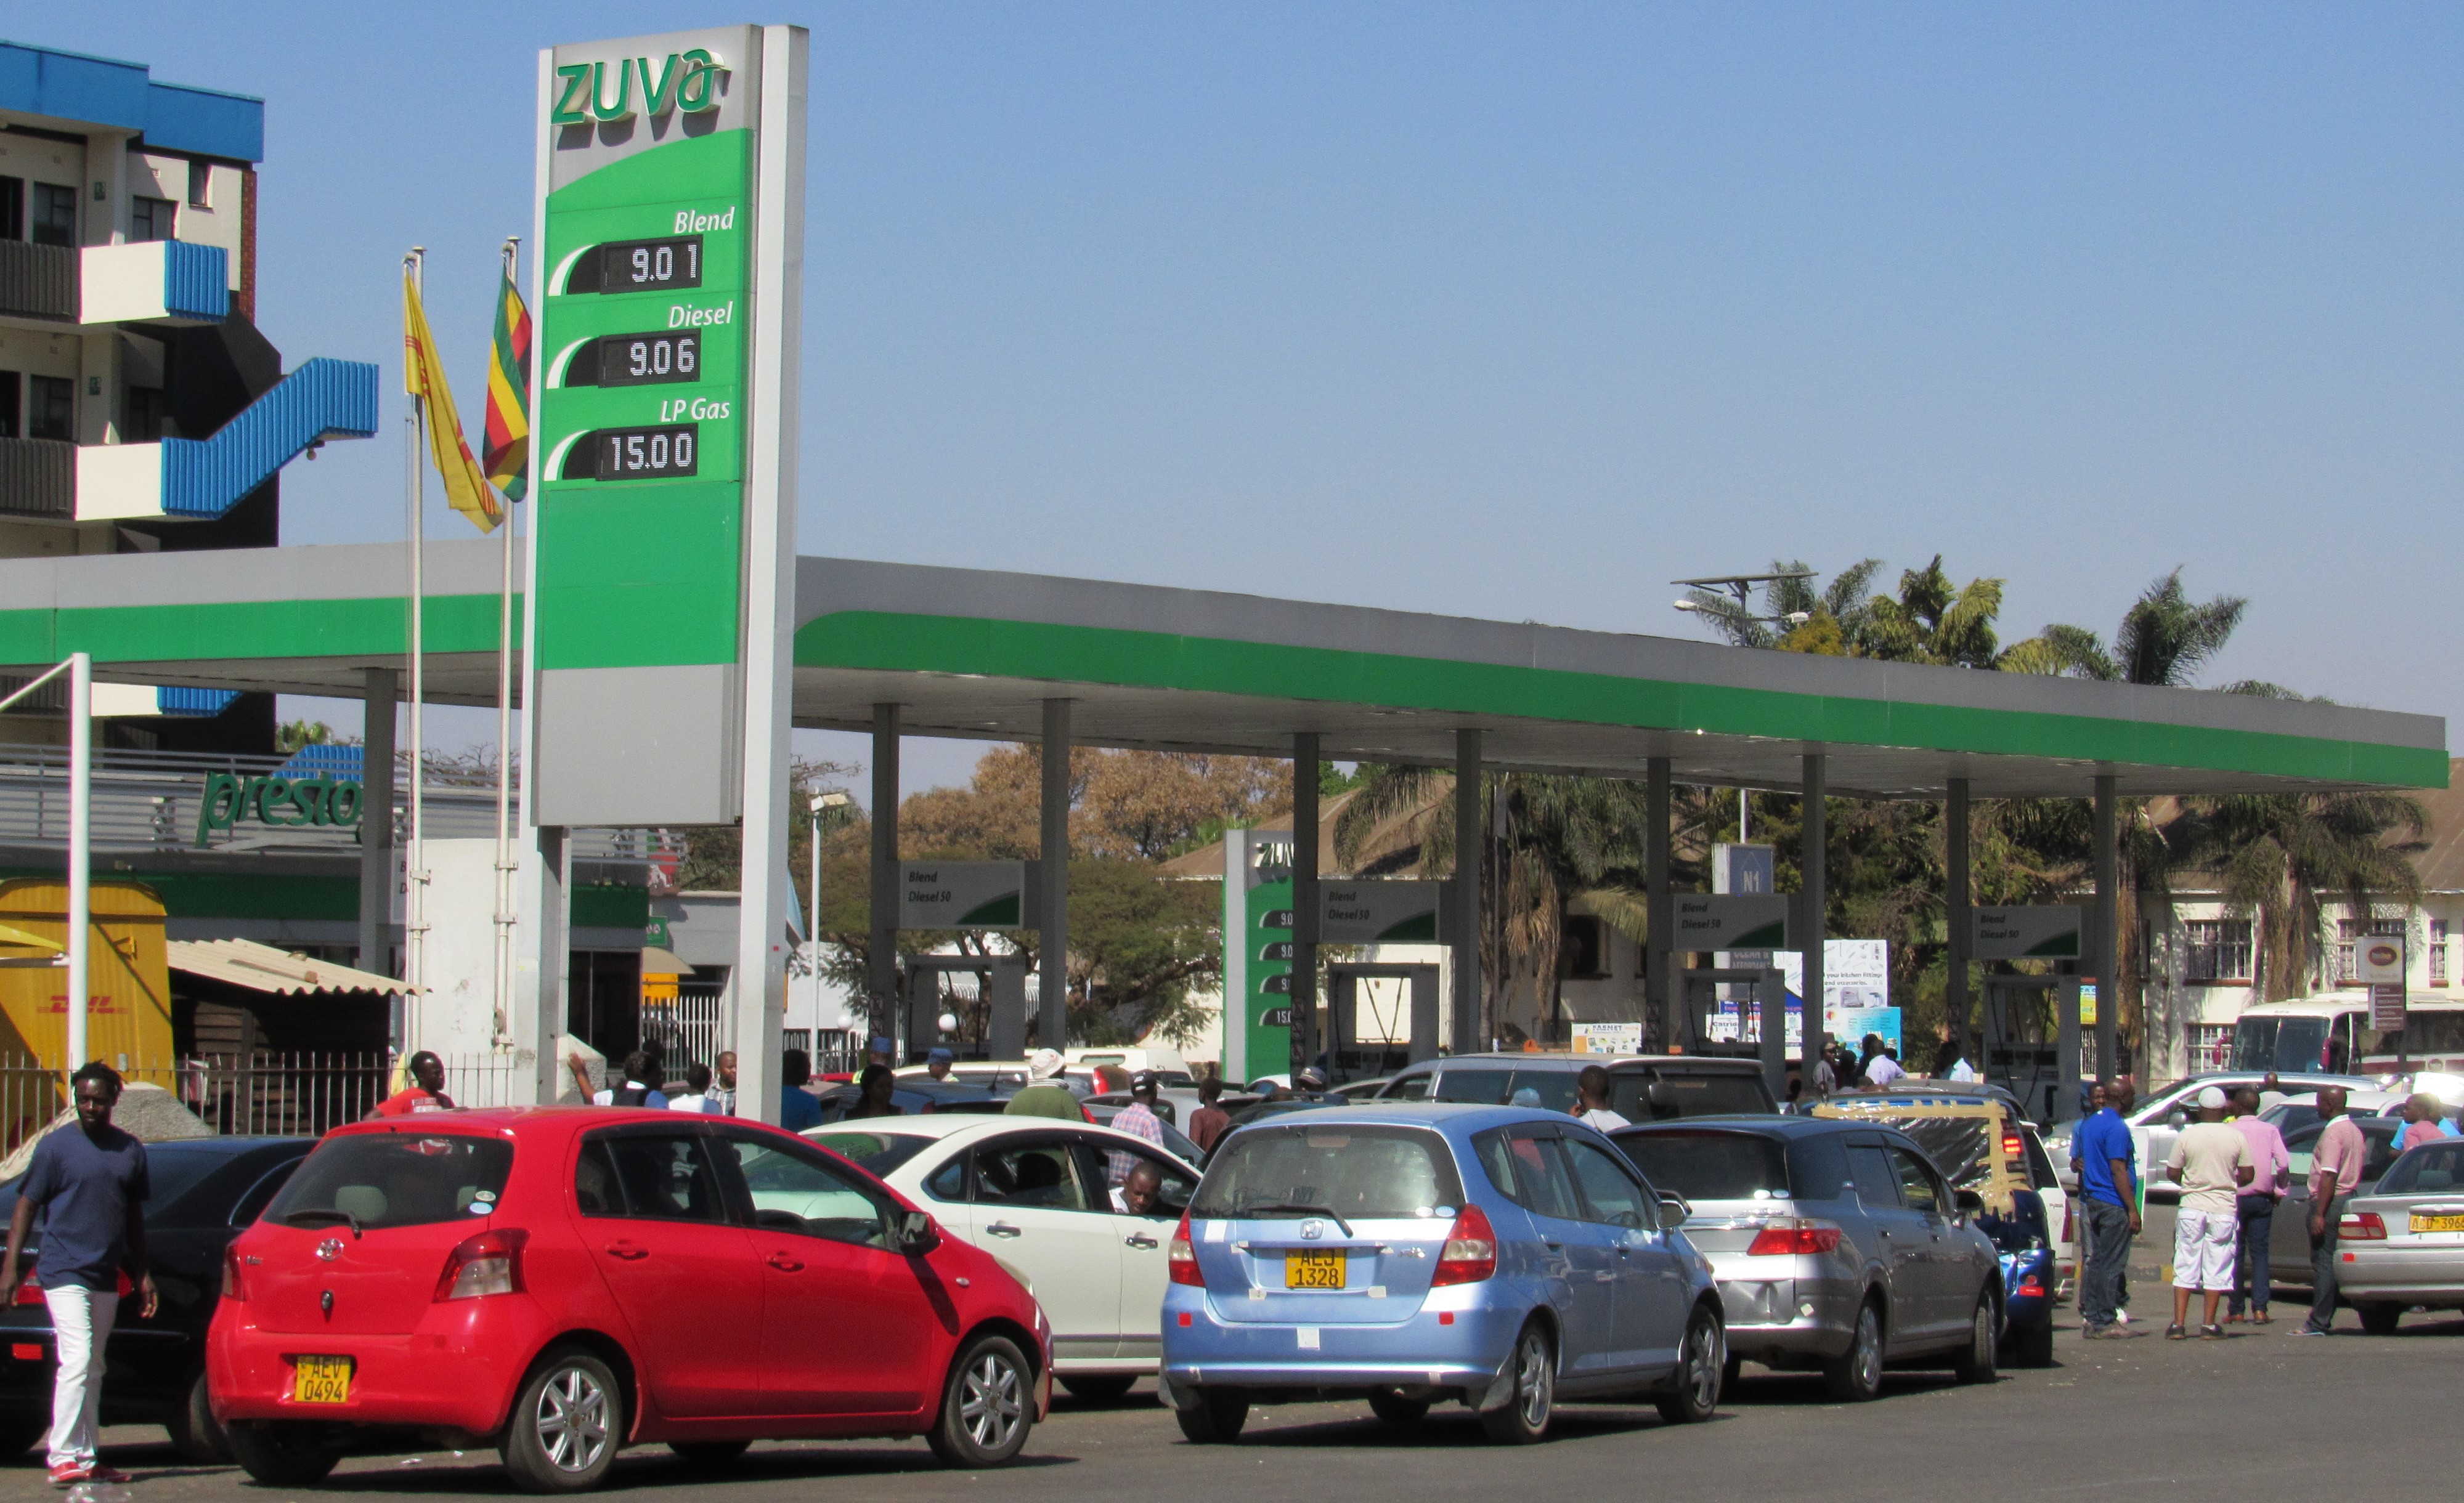 ZERA Has Increased Diesel And Petrol Prices In USD